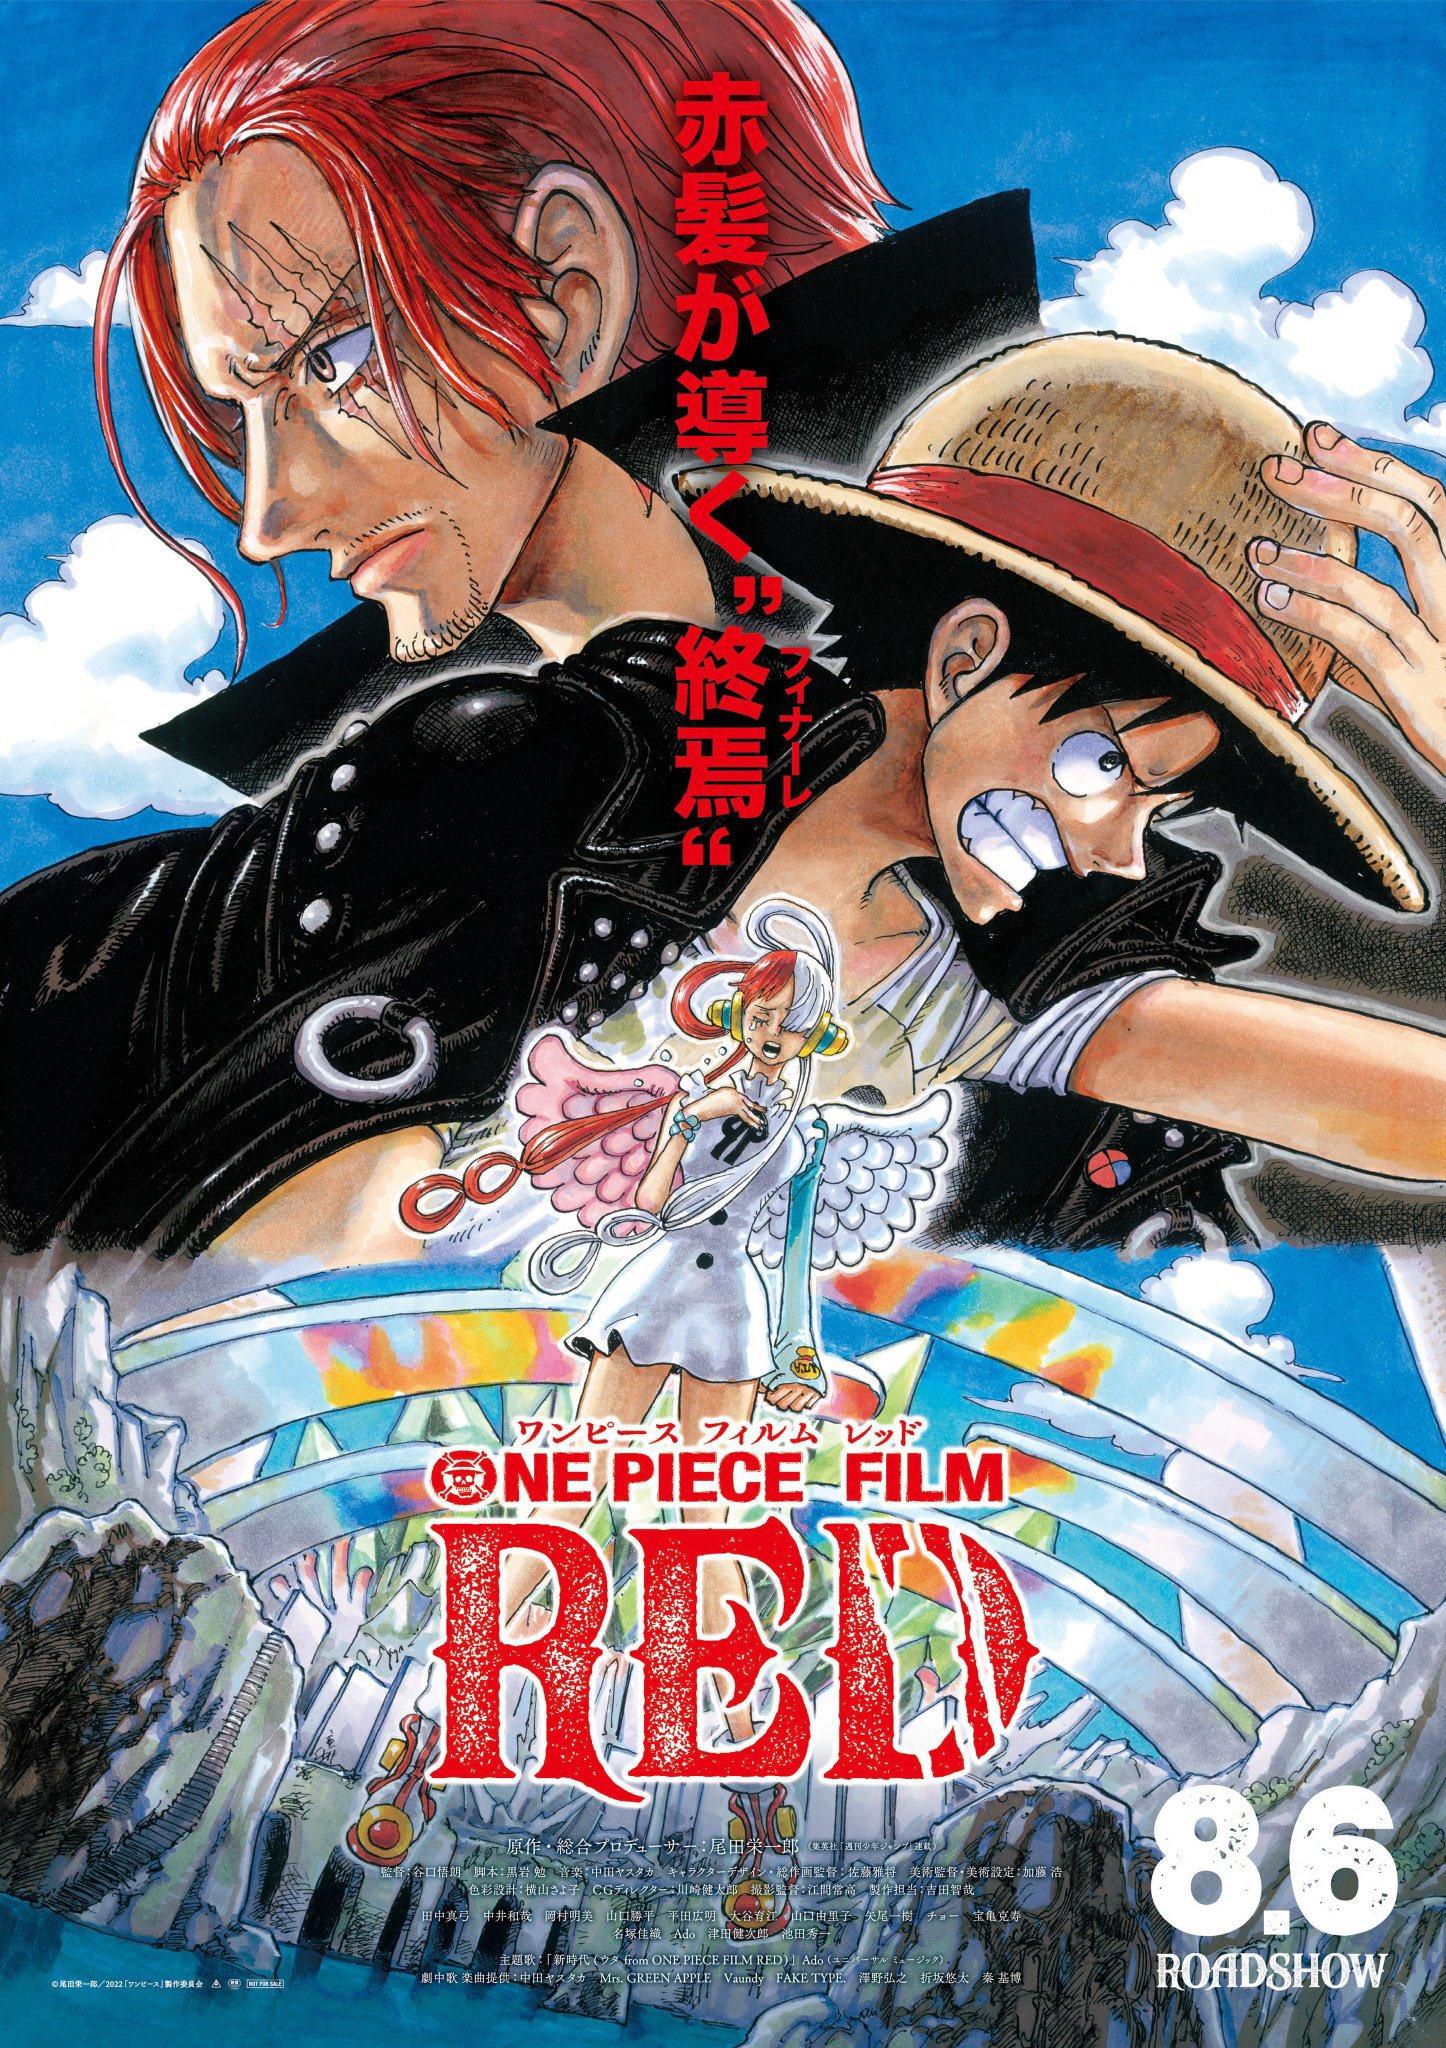 One Piece Anime Mini Kit Posters  froheyo